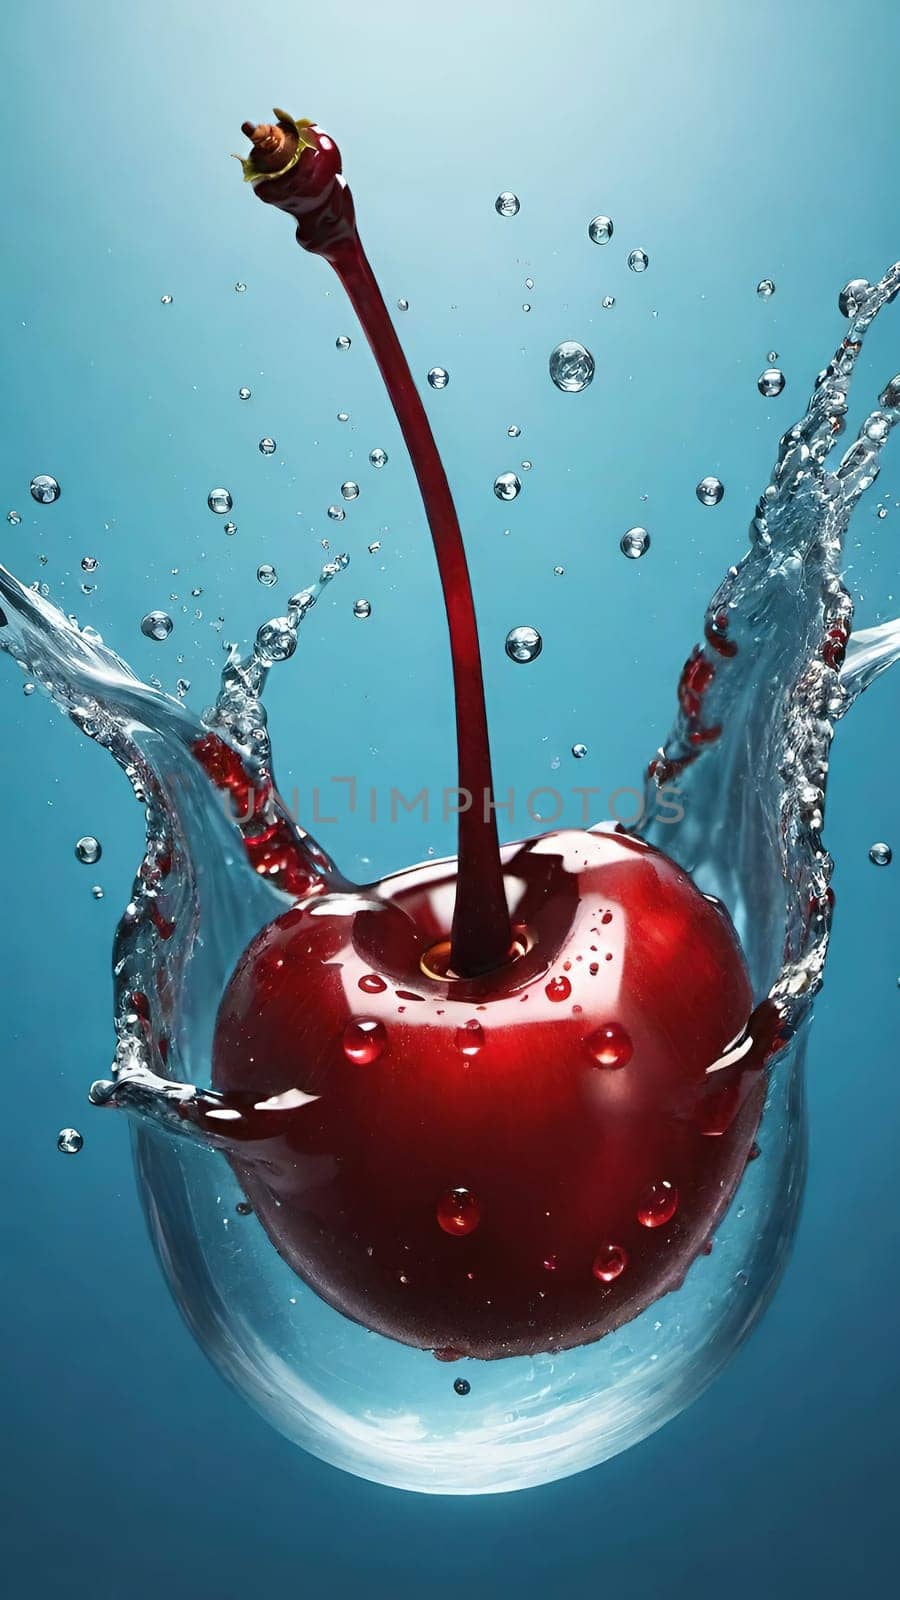 cherry with water splash isolated on background. by yilmazsavaskandag